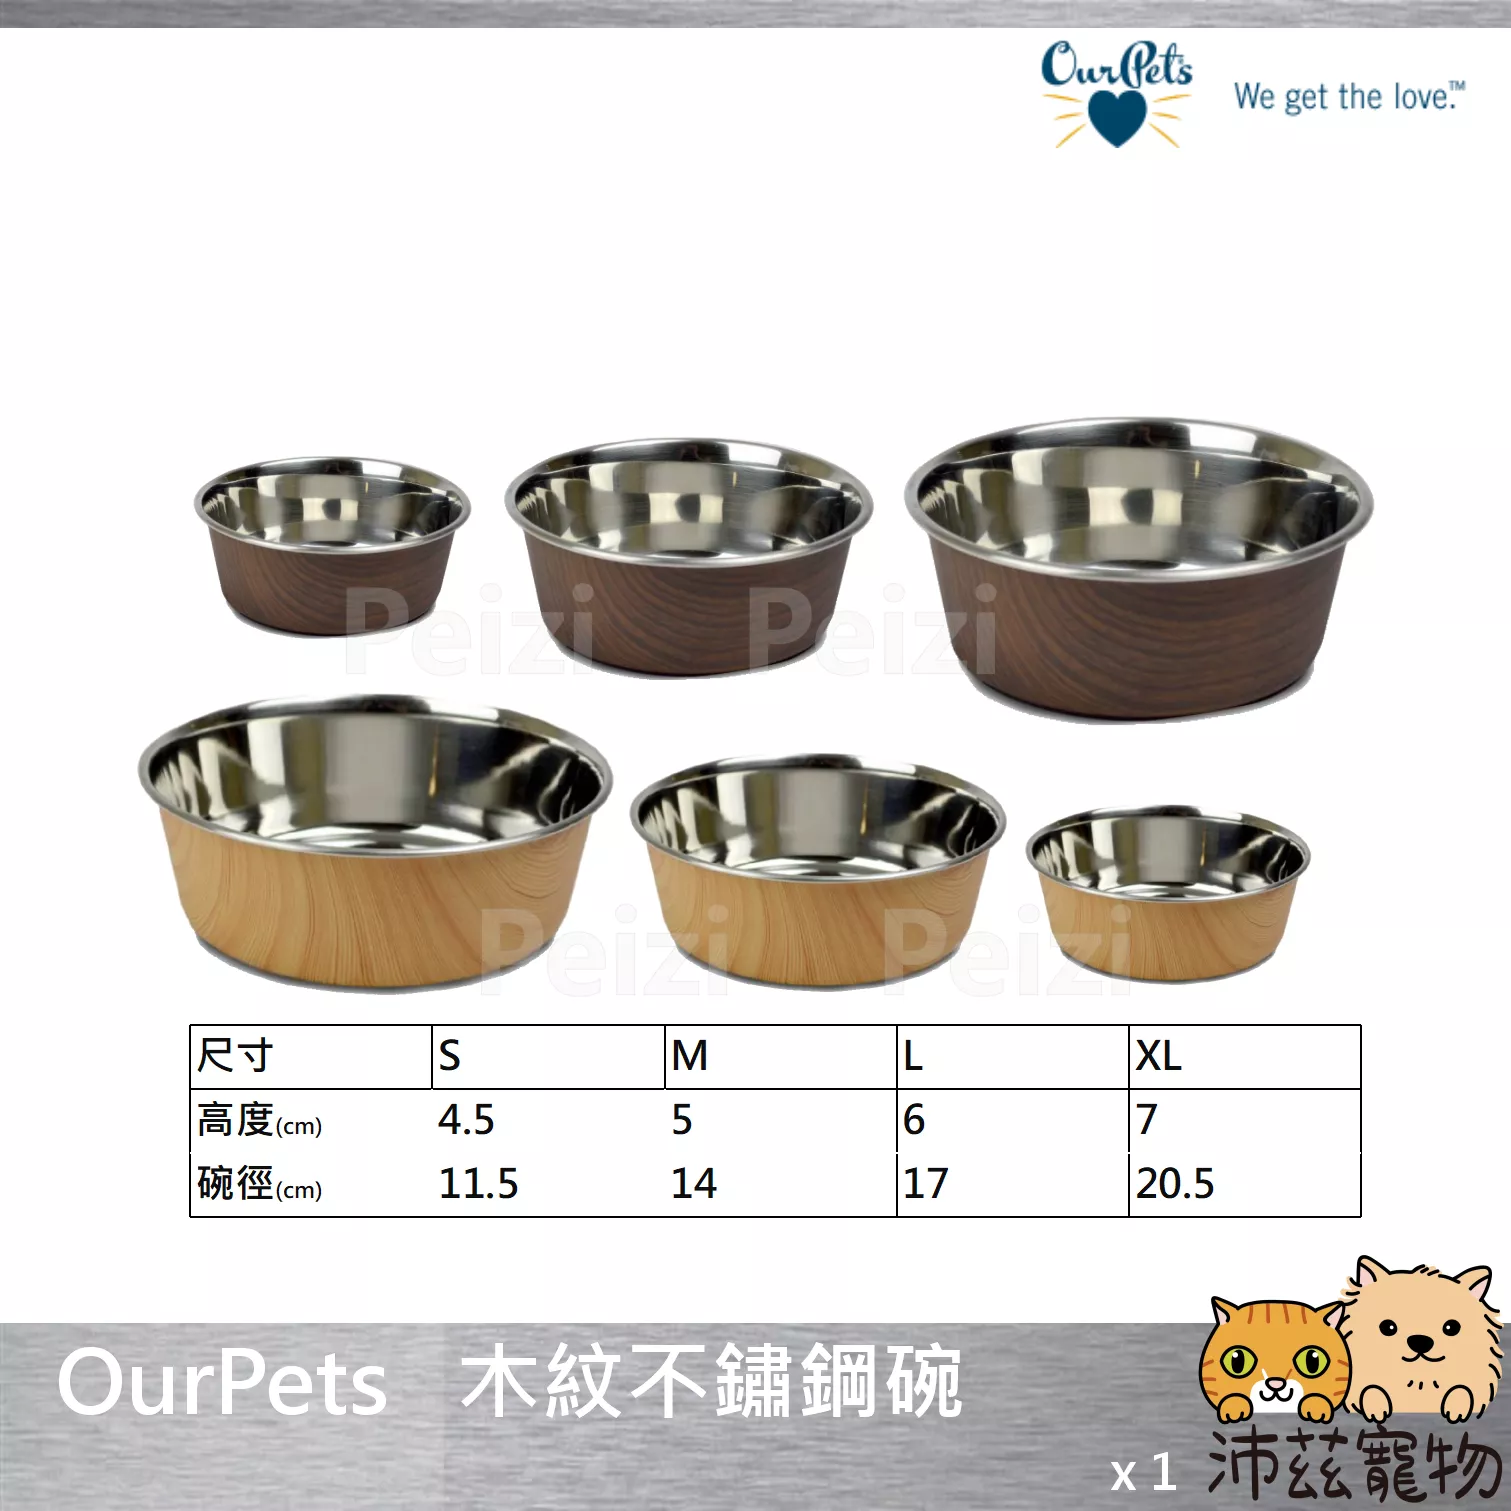 【OurPets 木紋不鏽鋼碗】DuraPet 不鏽鋼碗 寵物碗 餐具 餐碗 木紋 貓 狗 用品